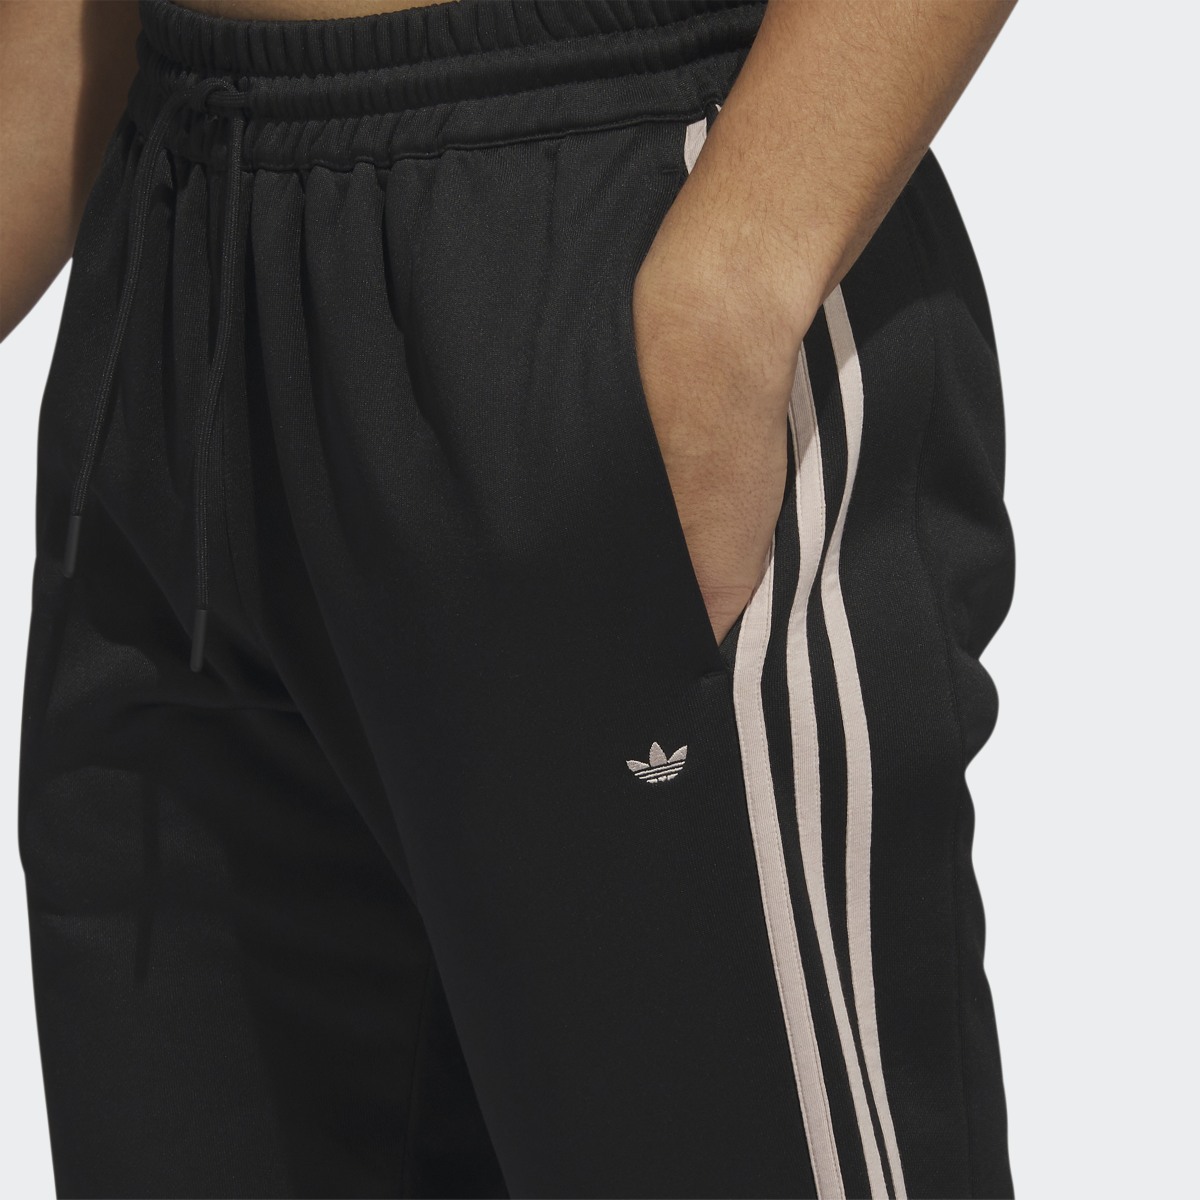 Adidas Originals Basketball Warm-Up Pants. 6